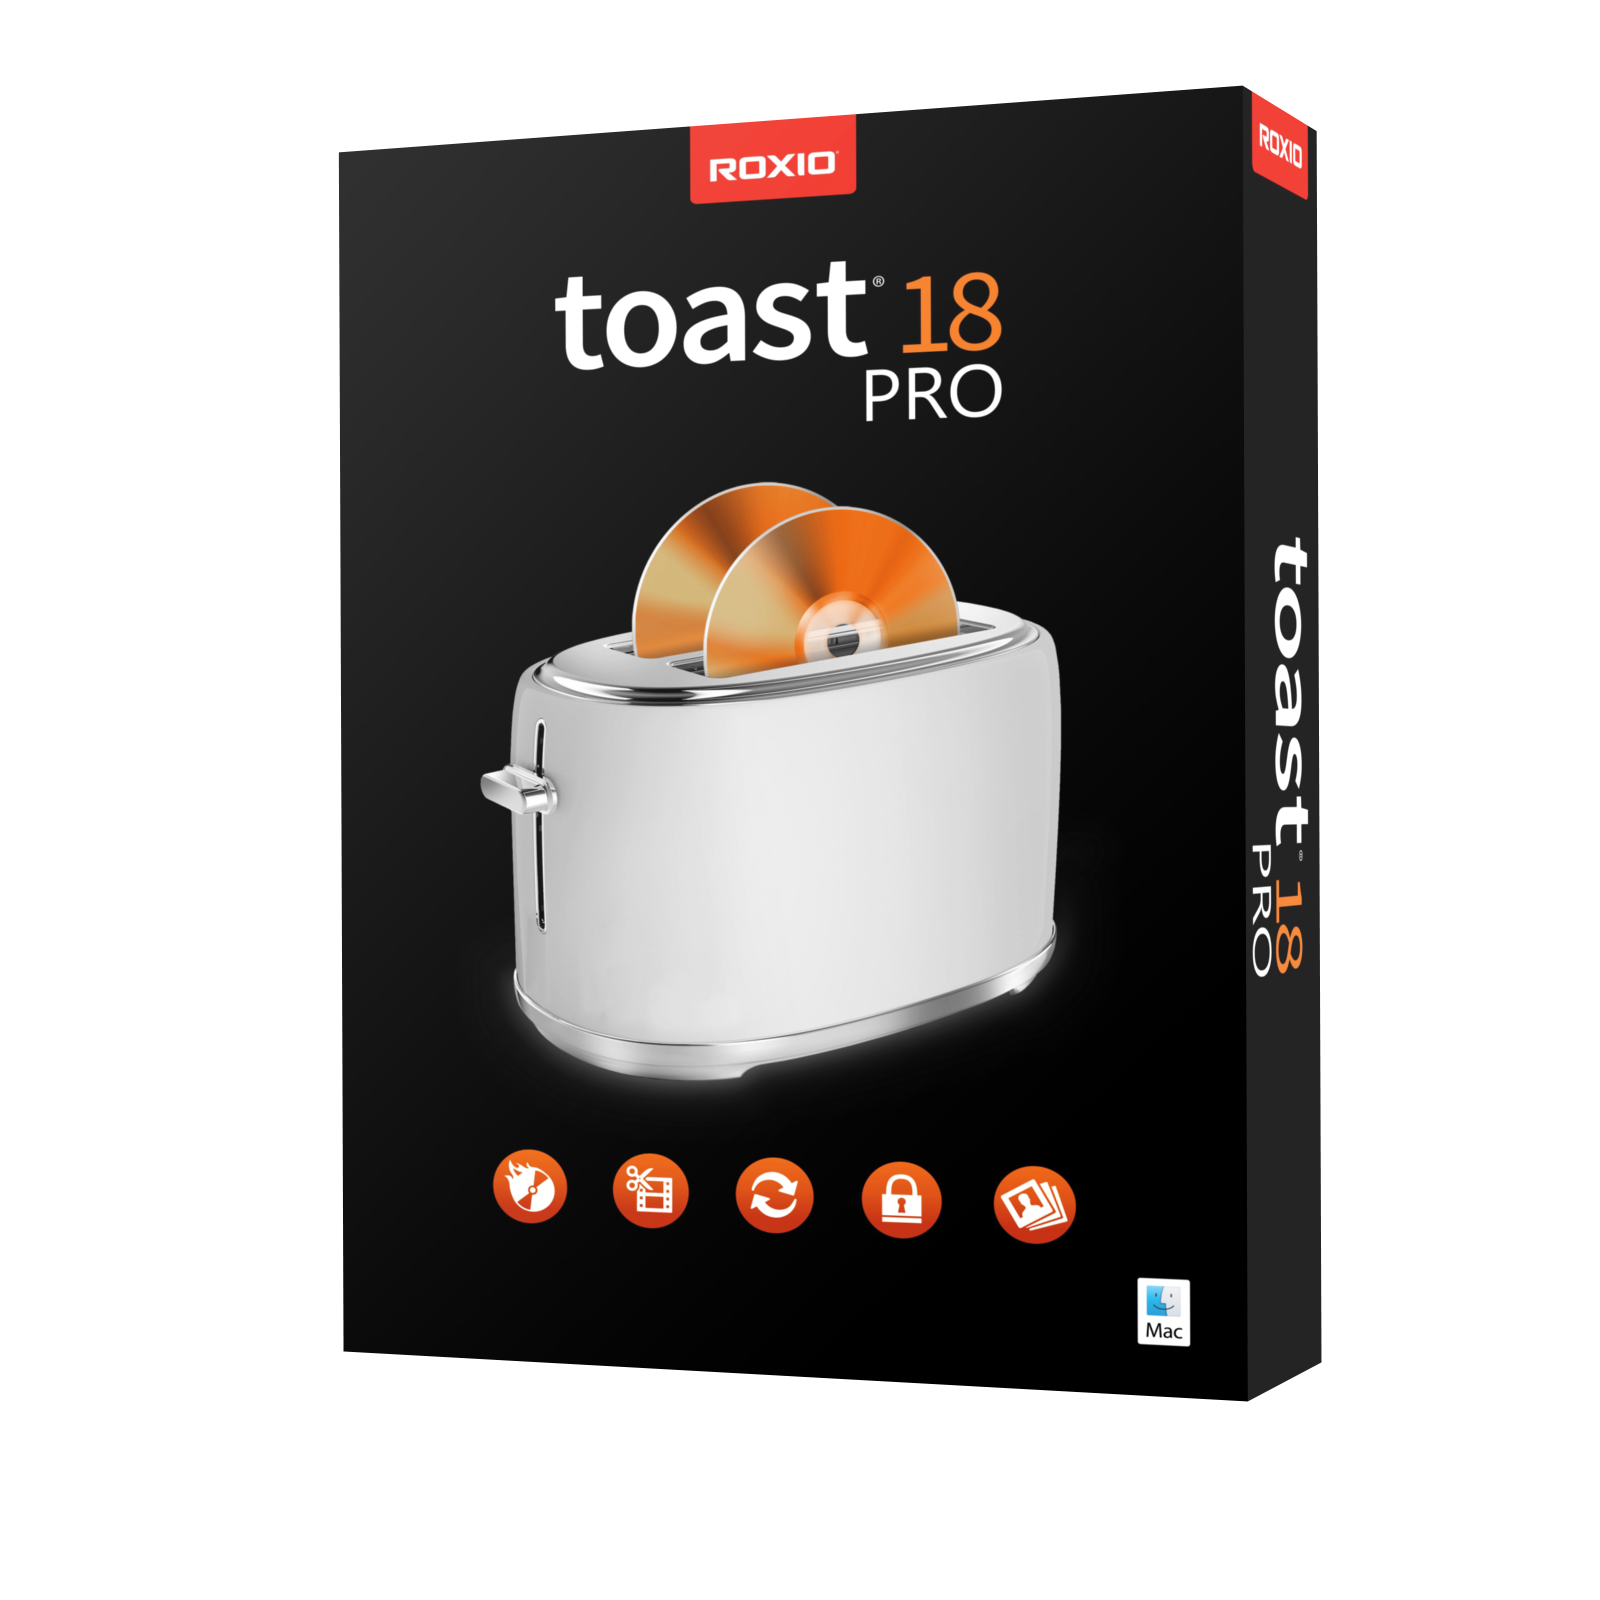 roxio toast 18 mac torrent